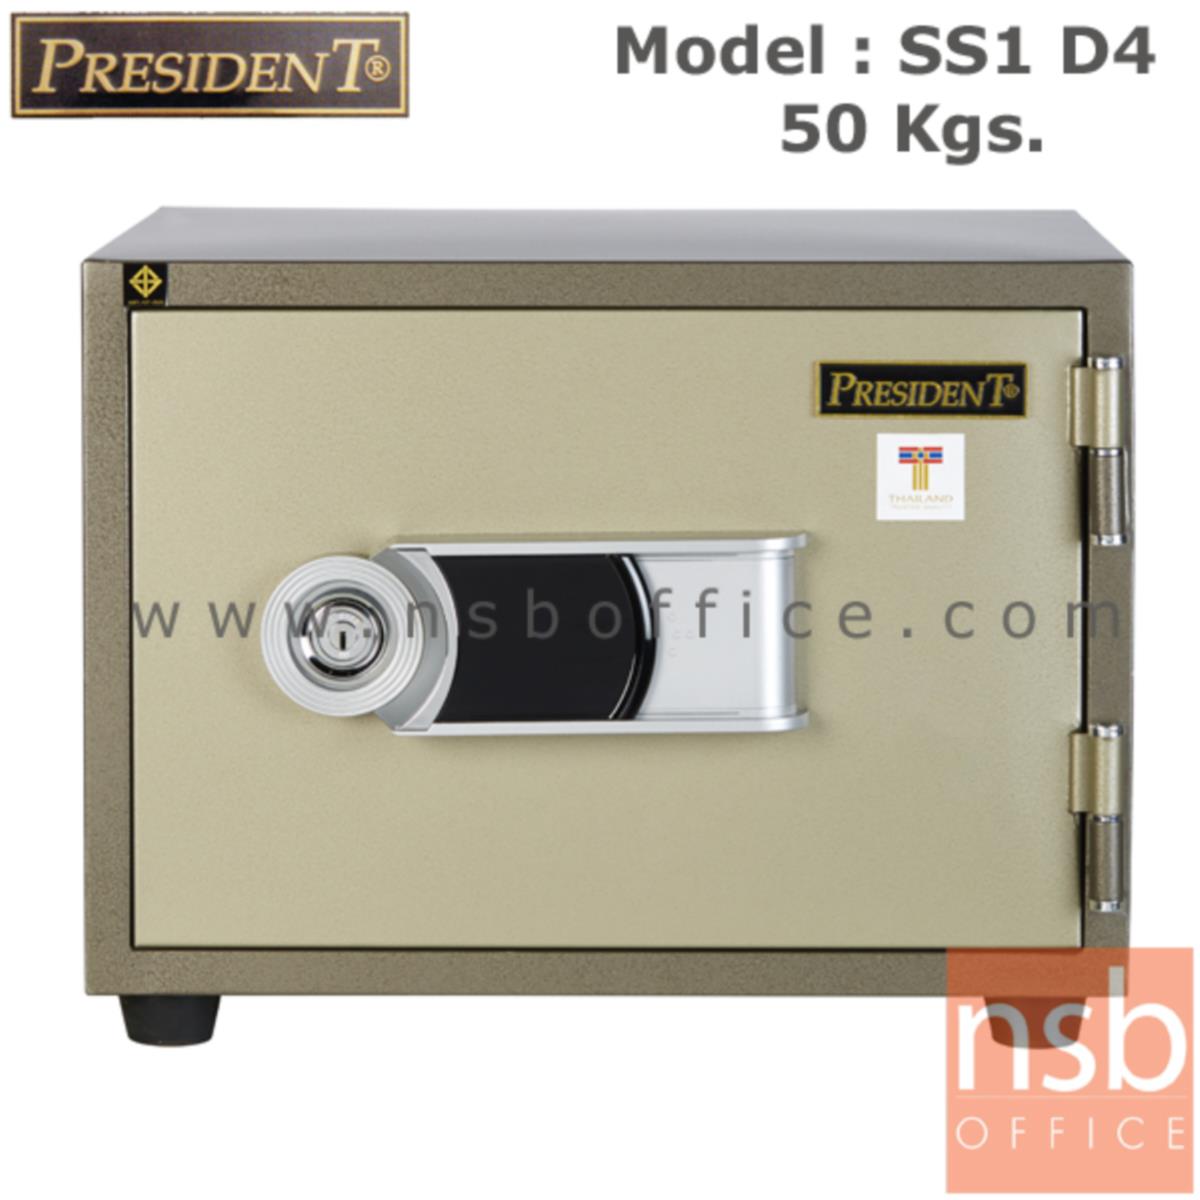 F05A070:ตู้เซฟนิรภัยชนิดดิจิตอลแบบใหม่ 50 กก.  รุ่น PRESIDENT-SS1D4   มี 1 กุญแจ 1 รหัส (รหัสใช้กดหน้าตู้)